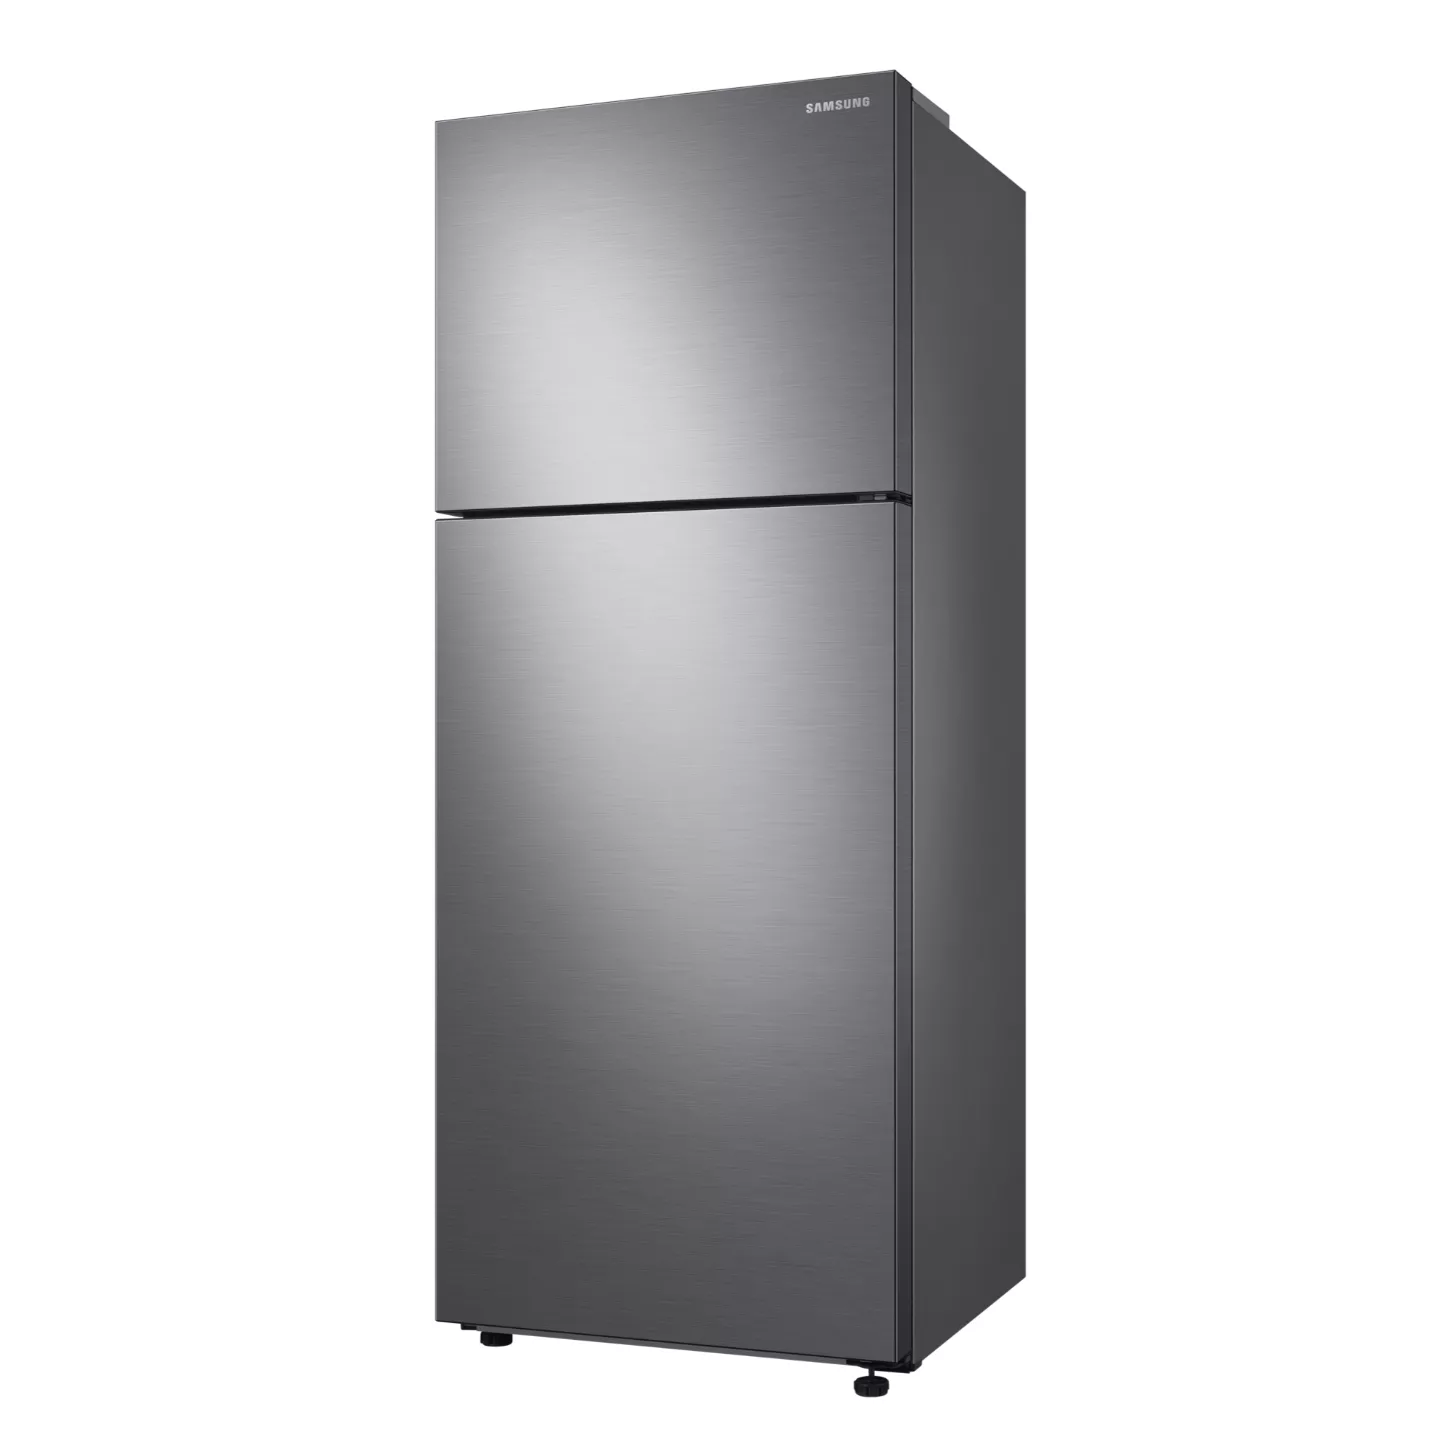 Refrigeradora inverter de 17 pies cúbicos samsung